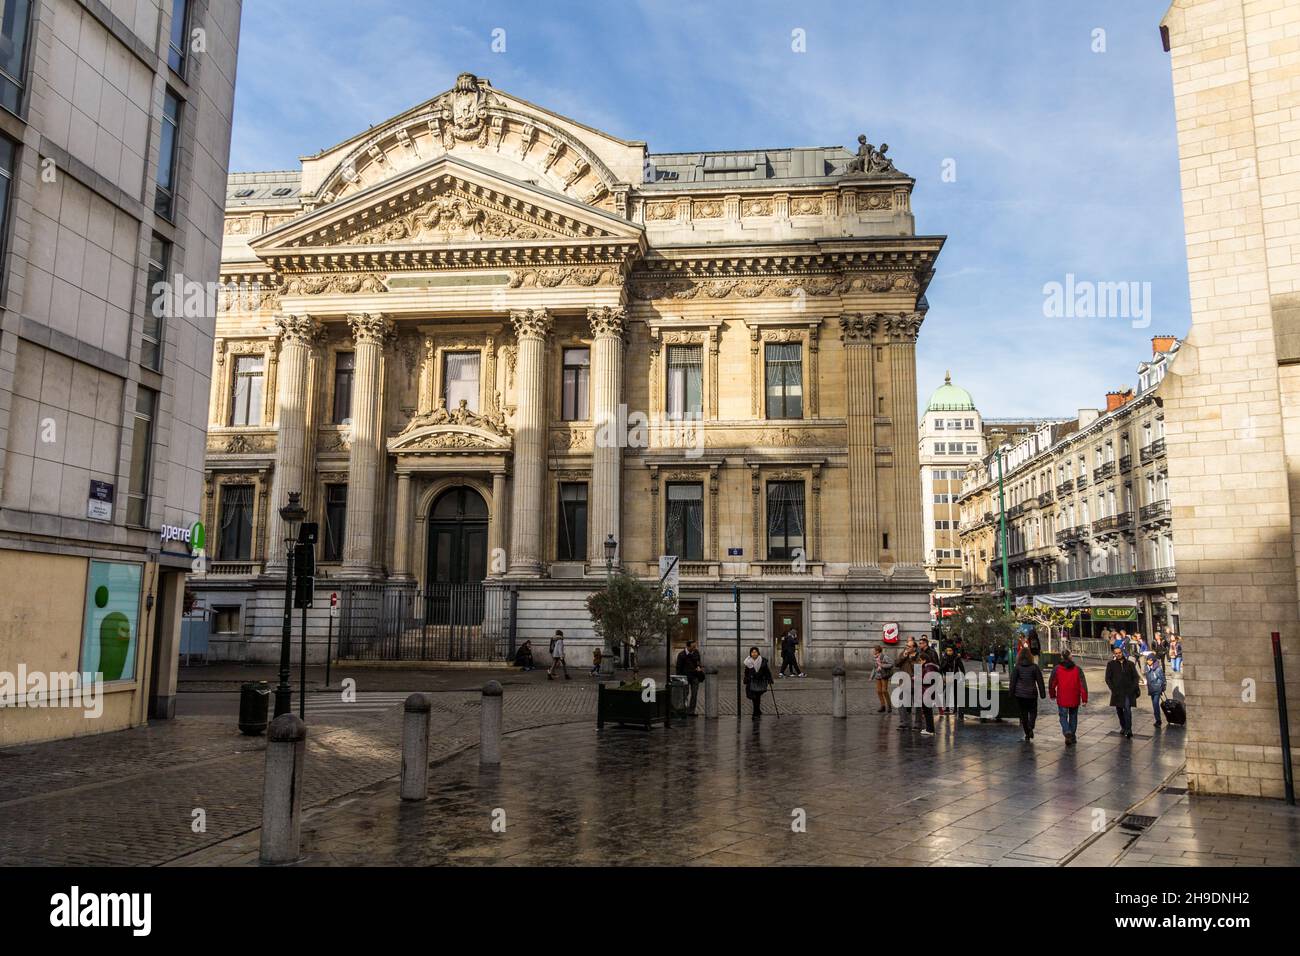 BRUSSELS, BELGIUM - NOV 3, 2018: Brussels Stock Exchange building in Brussels, capital of Belgium Stock Photo